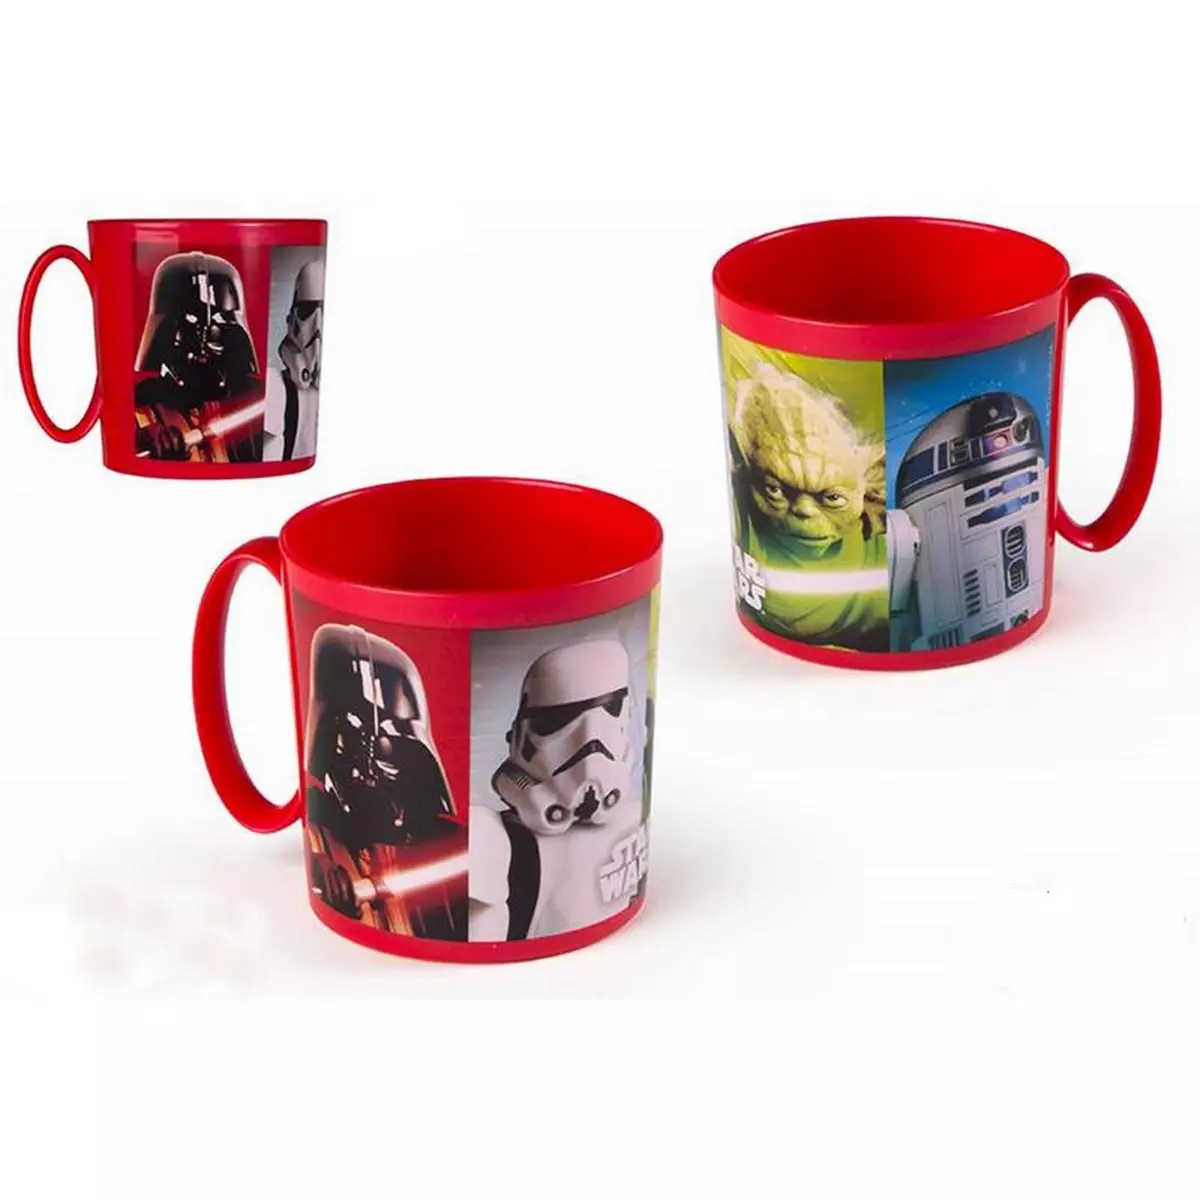  Tasse Star Wars Disney mug plastique gobelet enfant micro onde